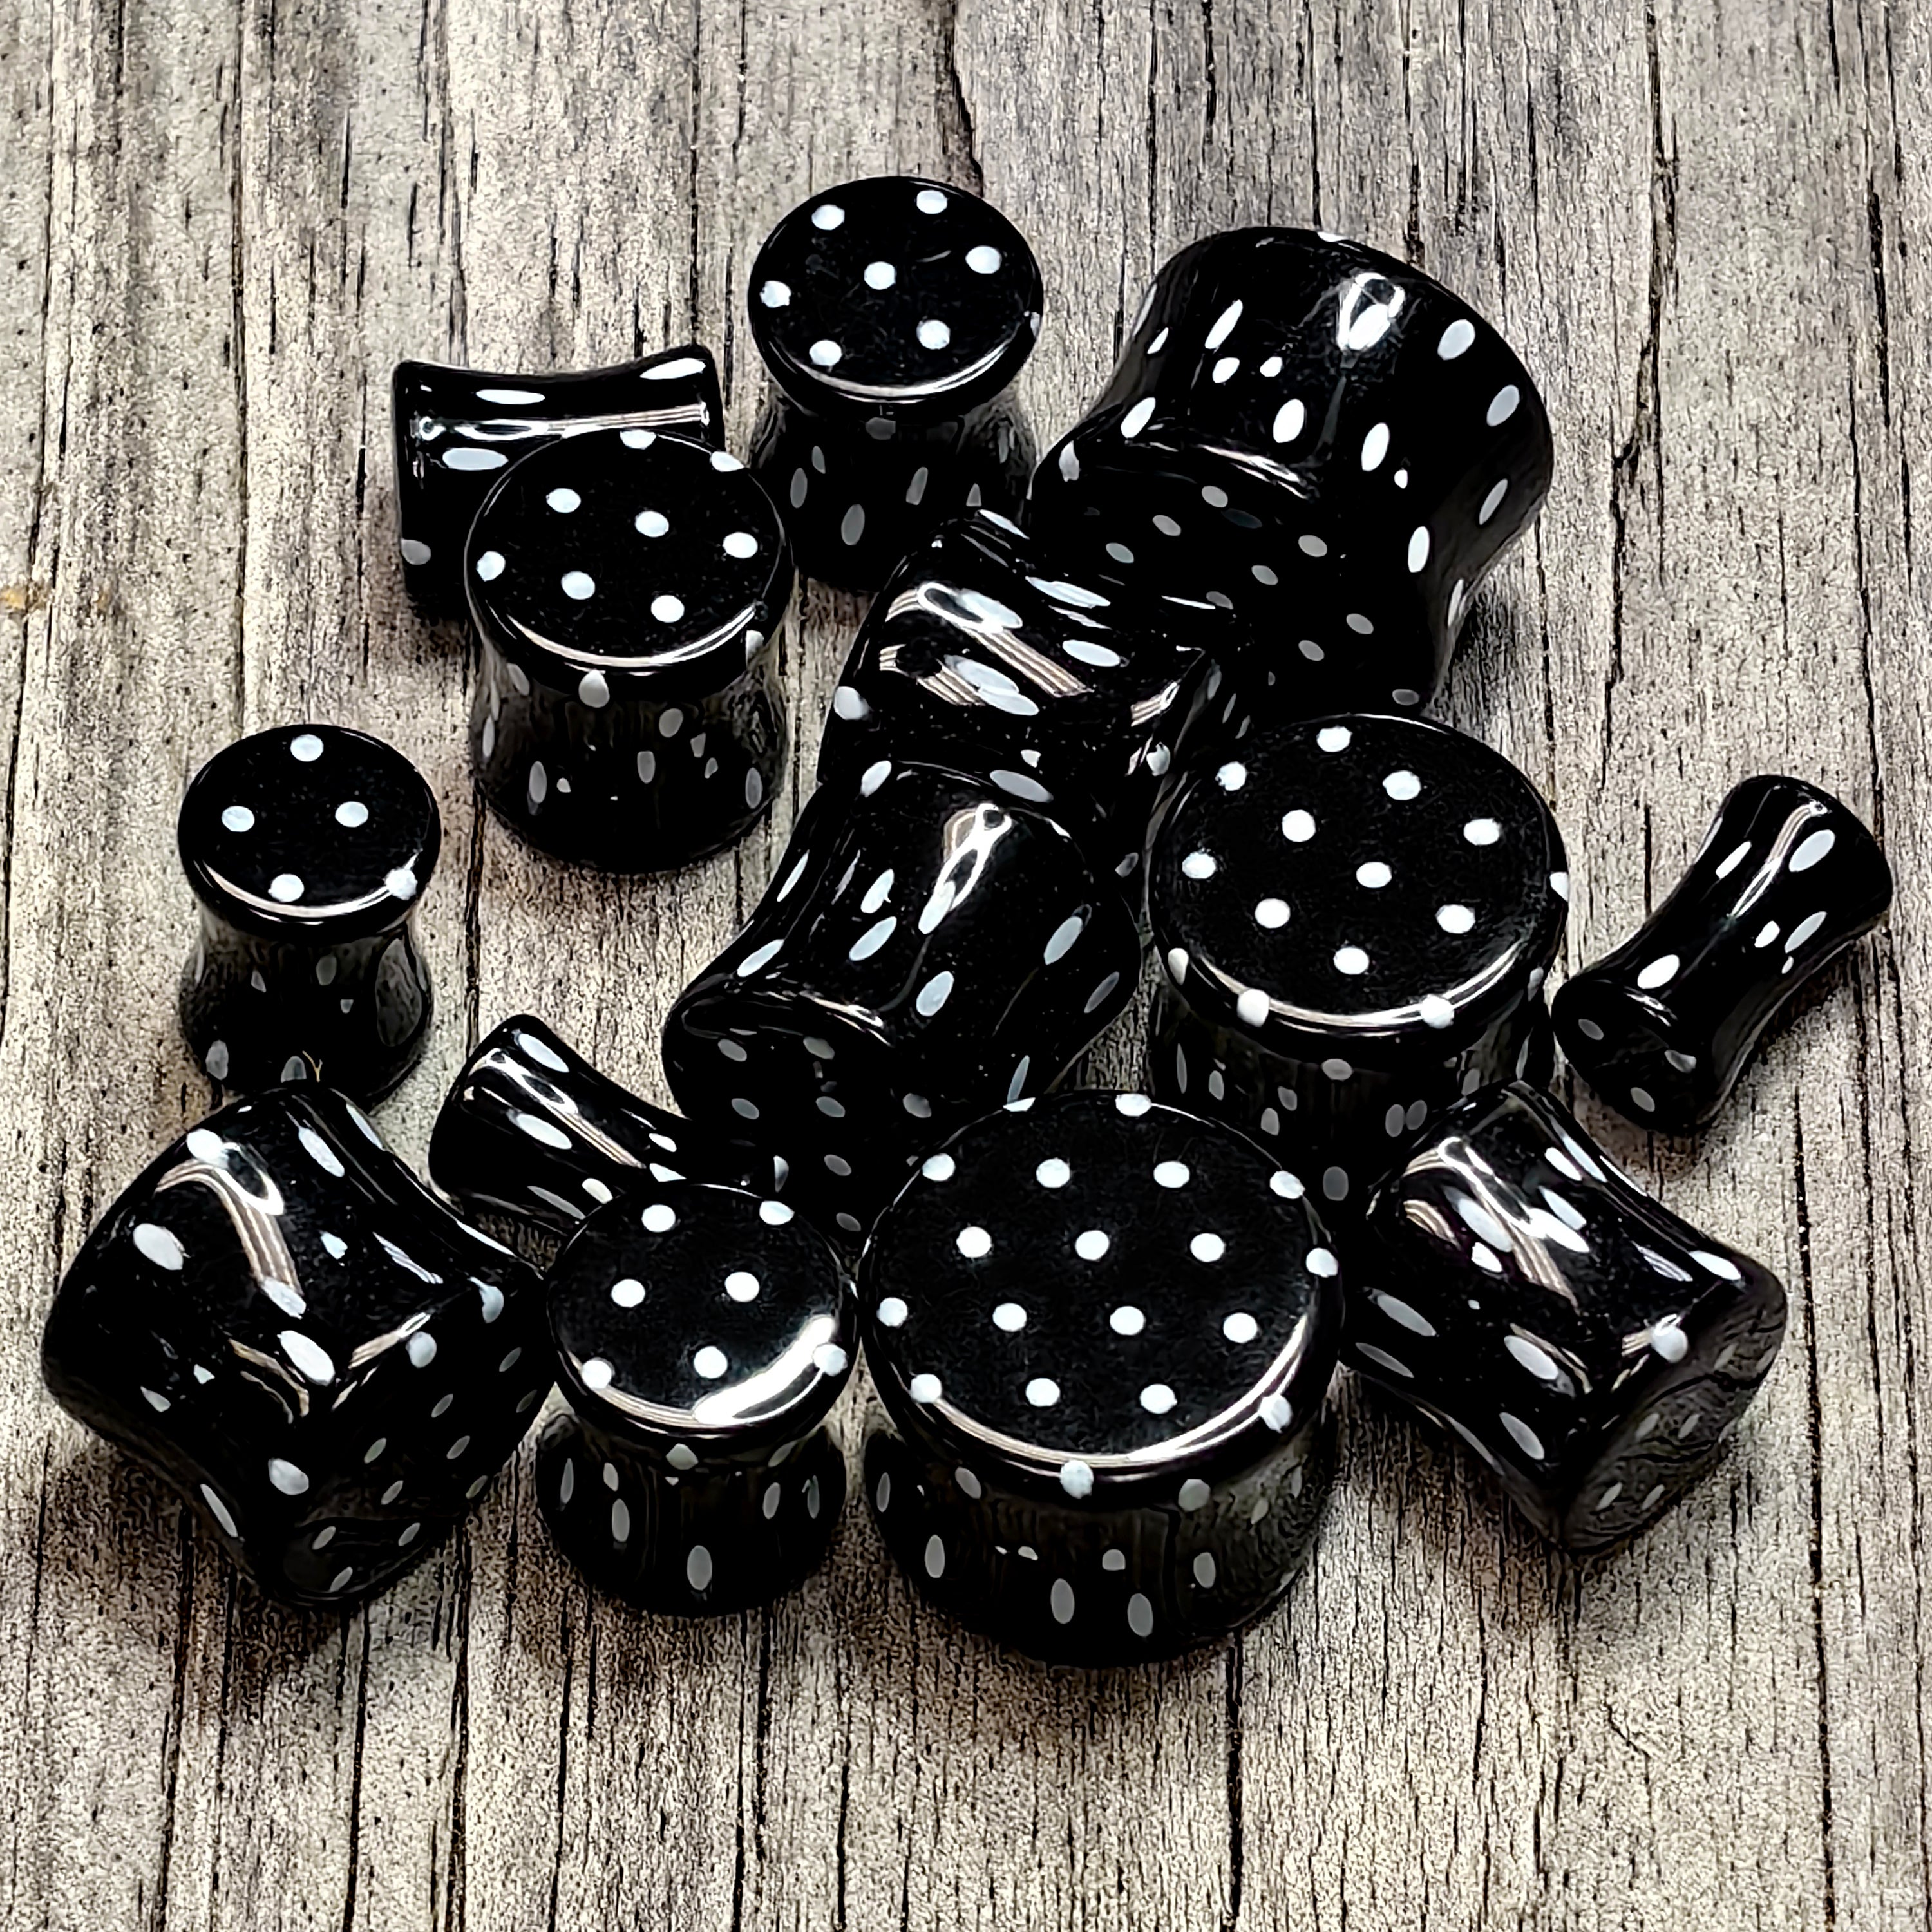 Black Acrylic Polka Dots White Double Flare Plug Set